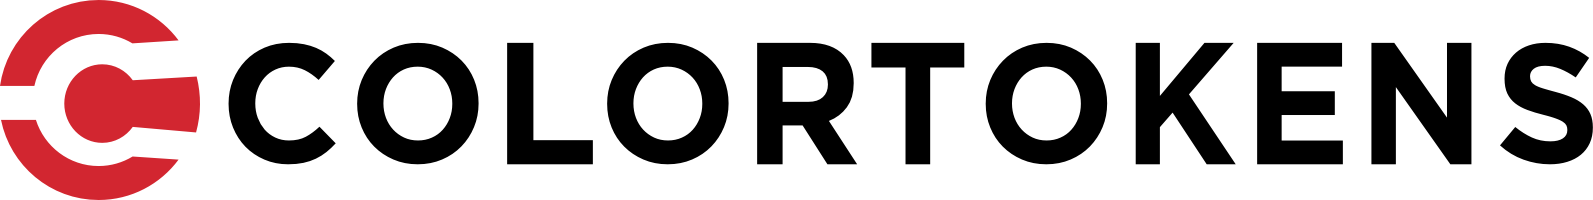 Colortokens Logo